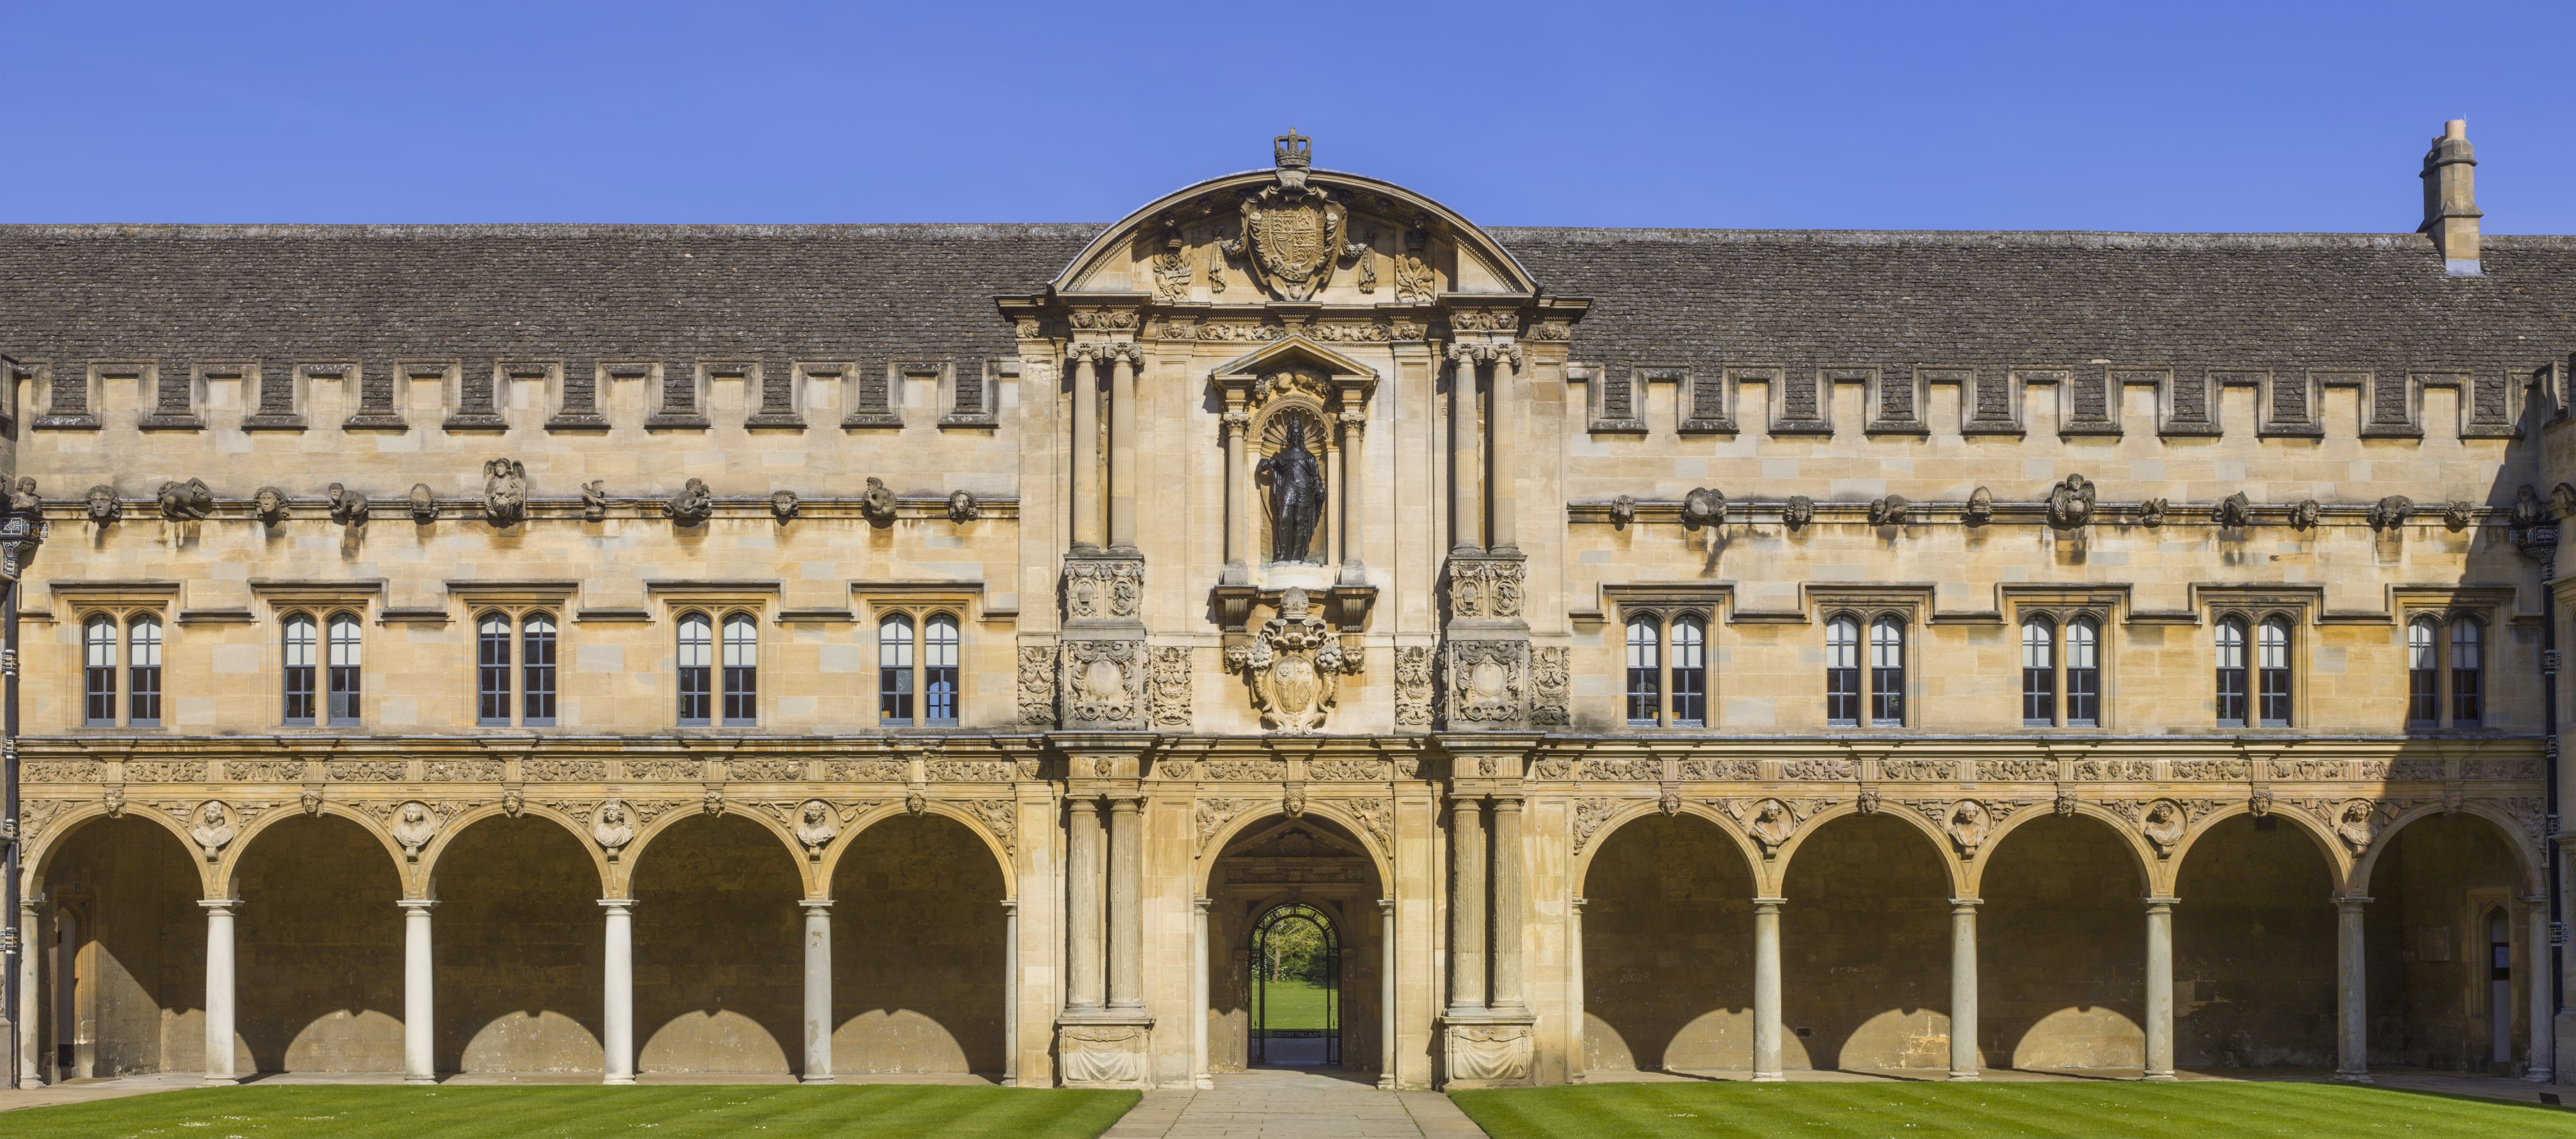 UK-2014-Oxford-St John's College 01a